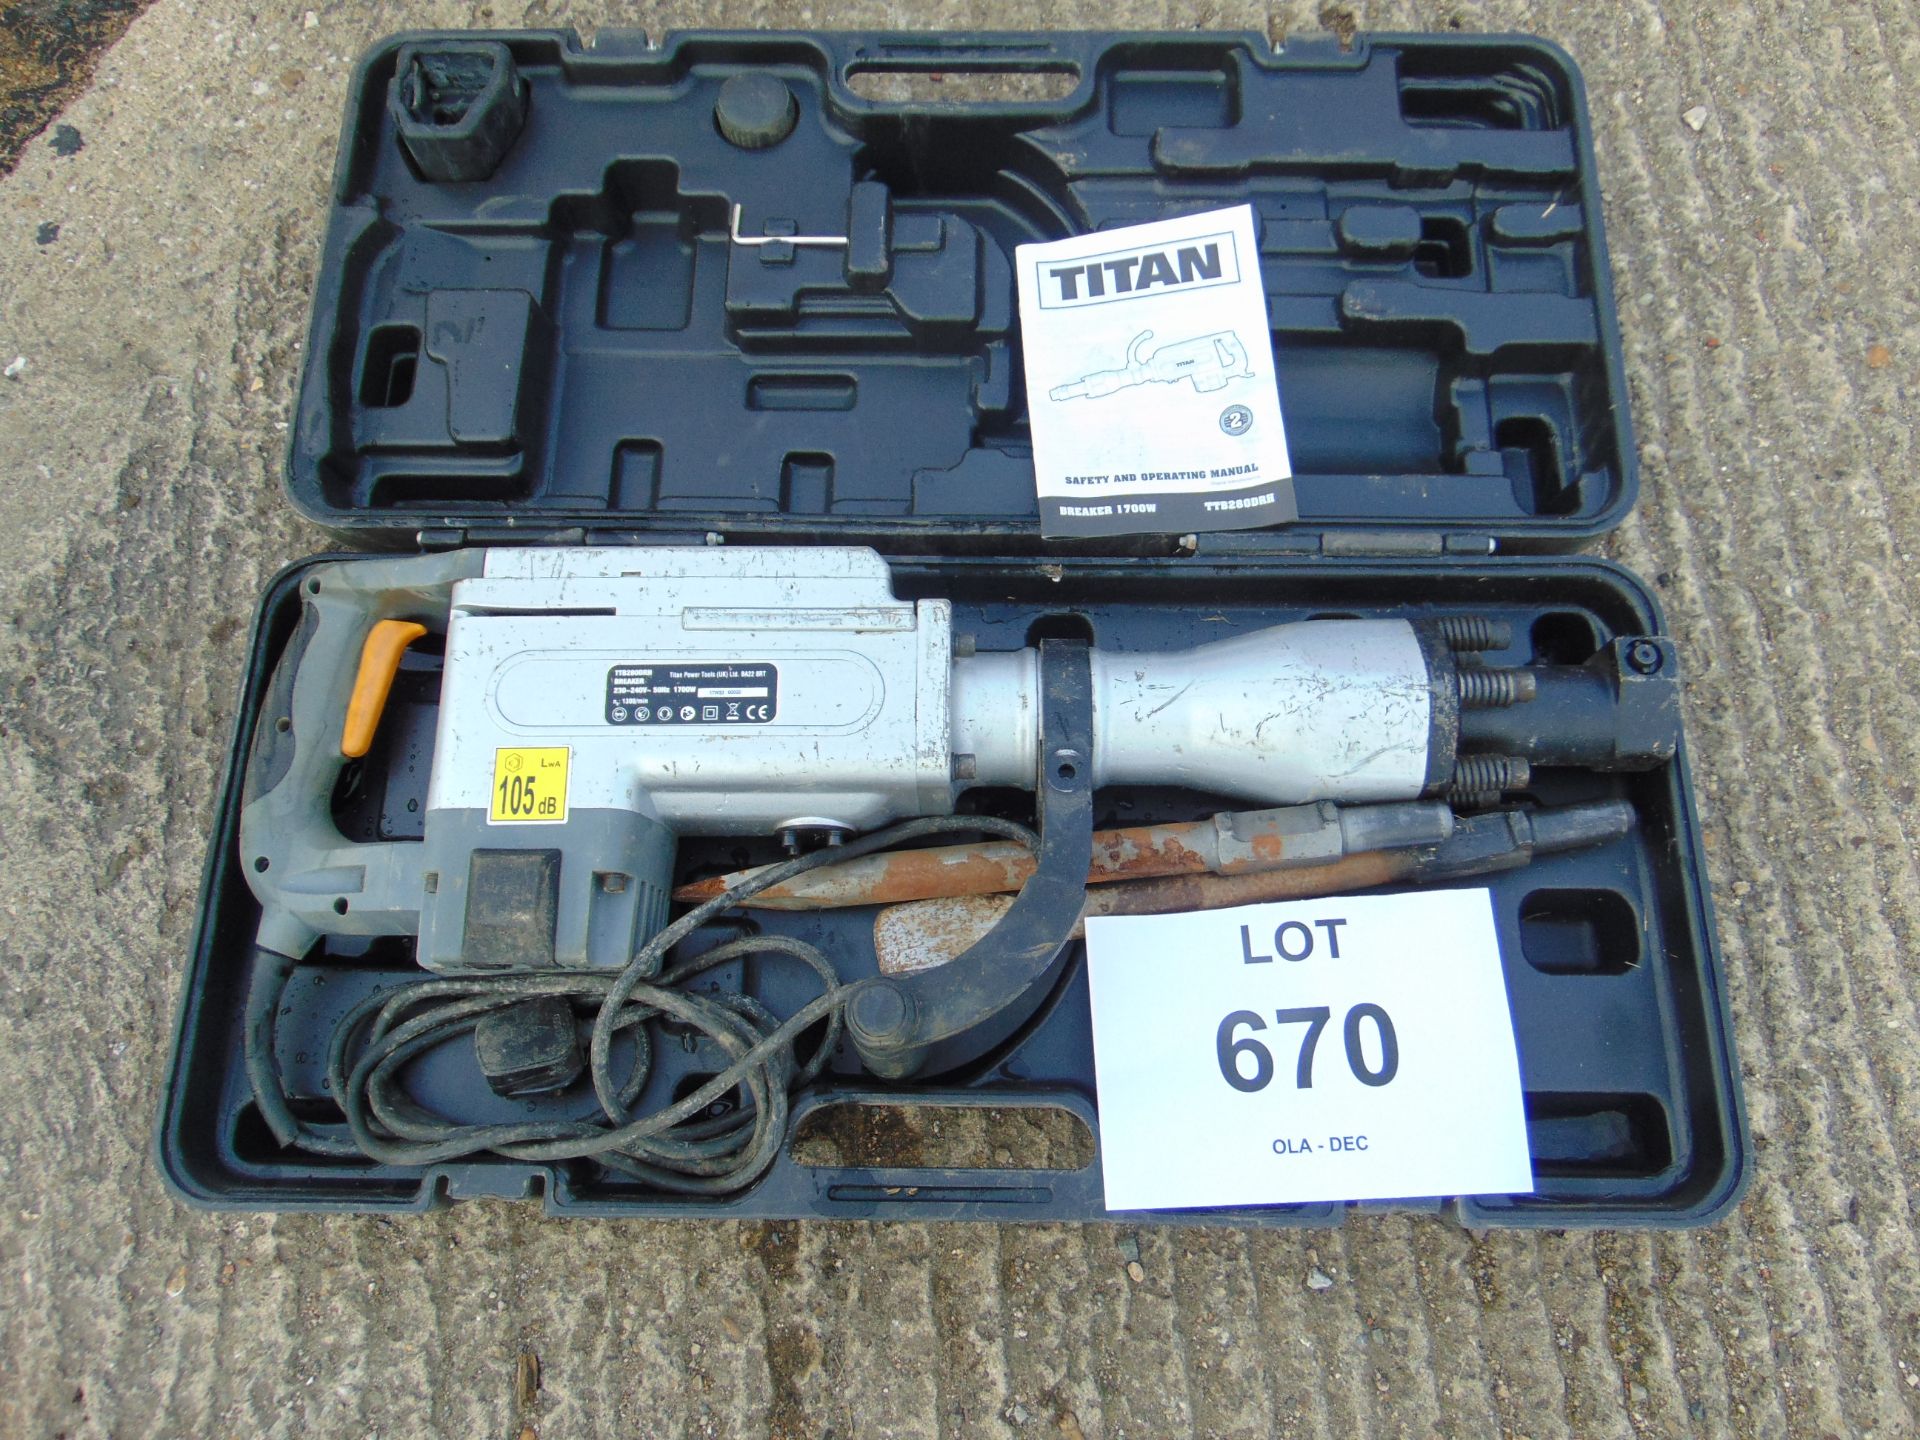 Titan 1700w 240 volt Breaker with Points in case as shown